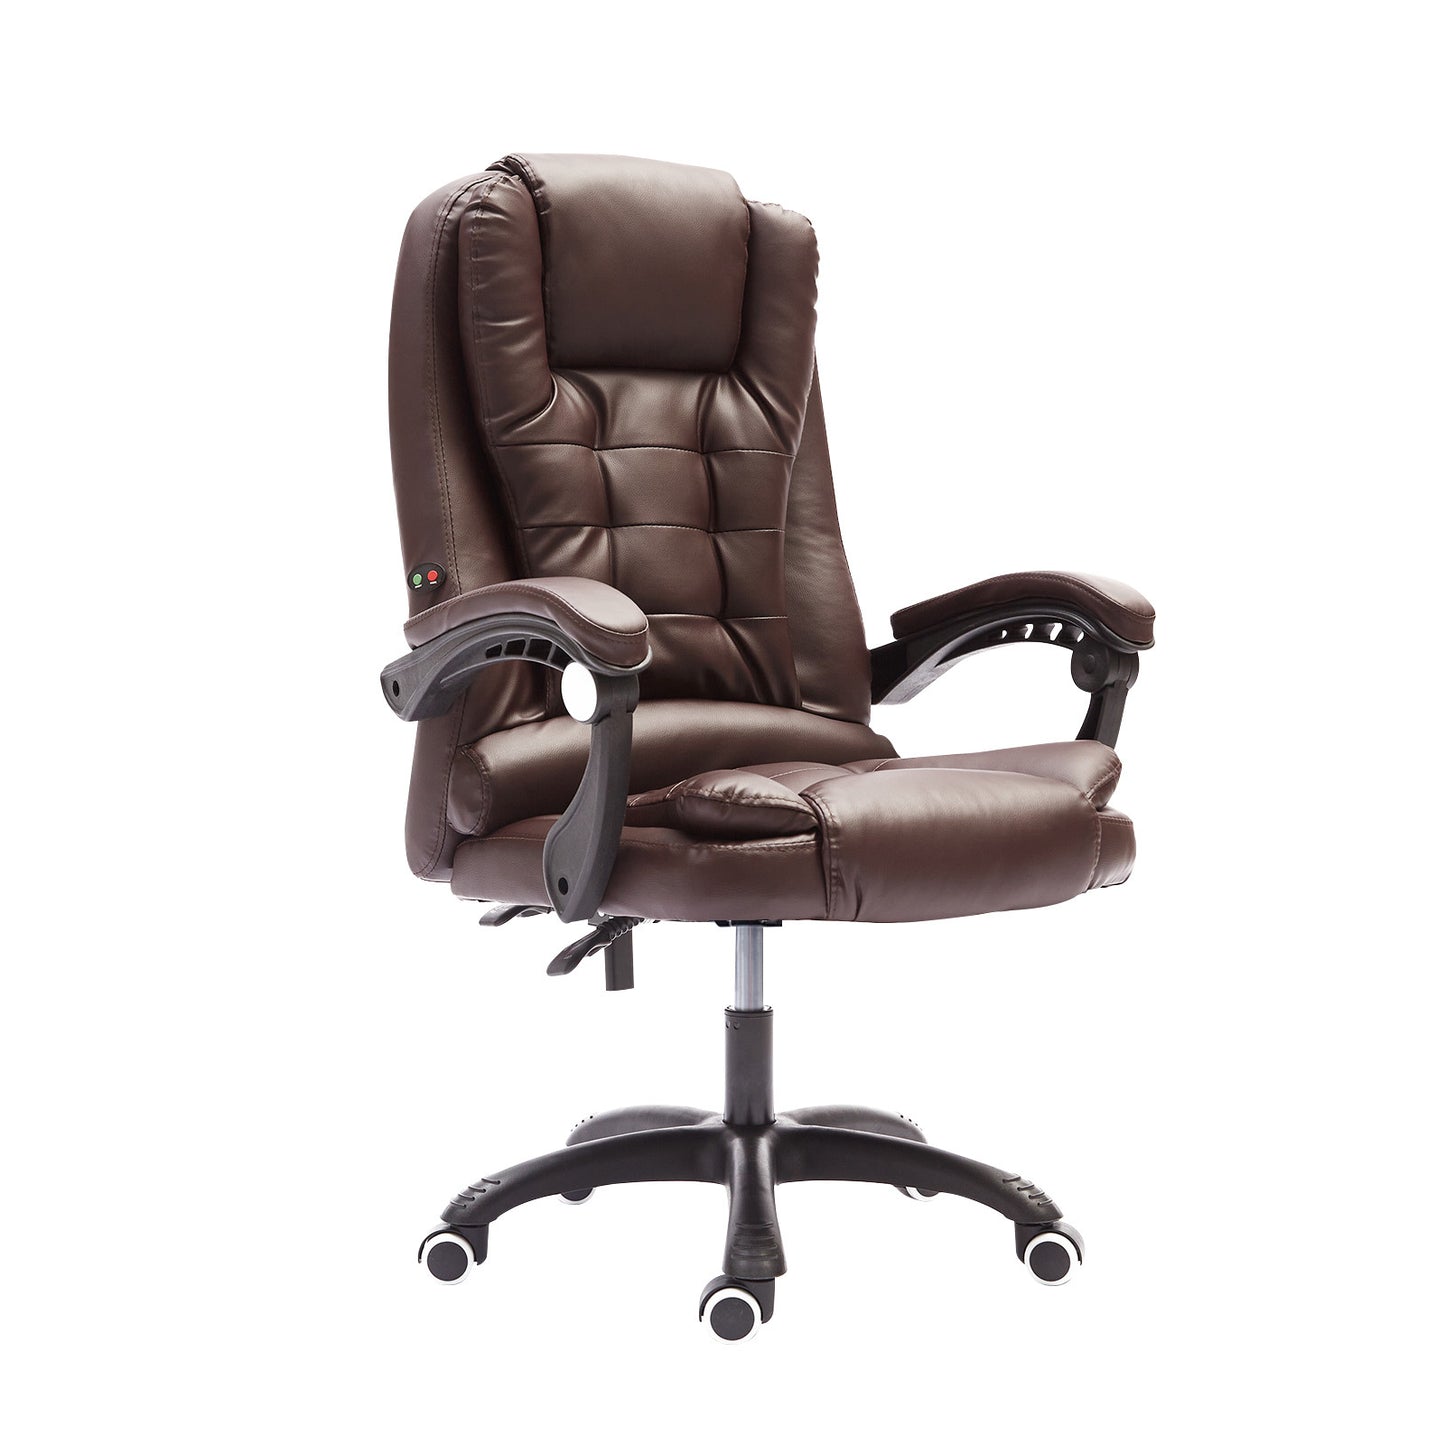 La Bella Massage Office Chair Vibration Ergonomic Executive Computer Gaming Work - Espresso